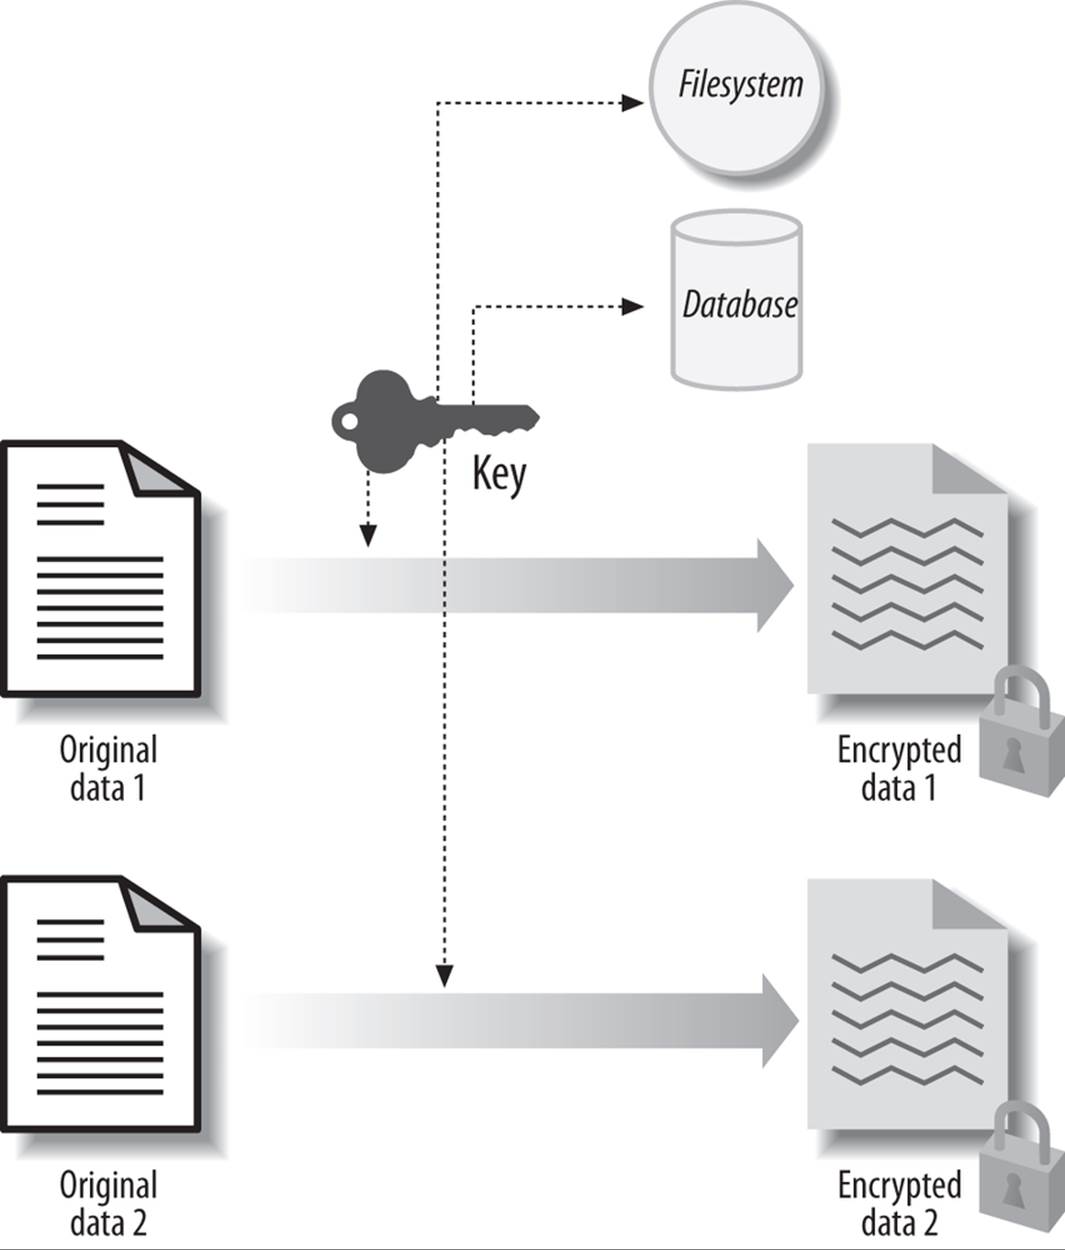 Single database key approach